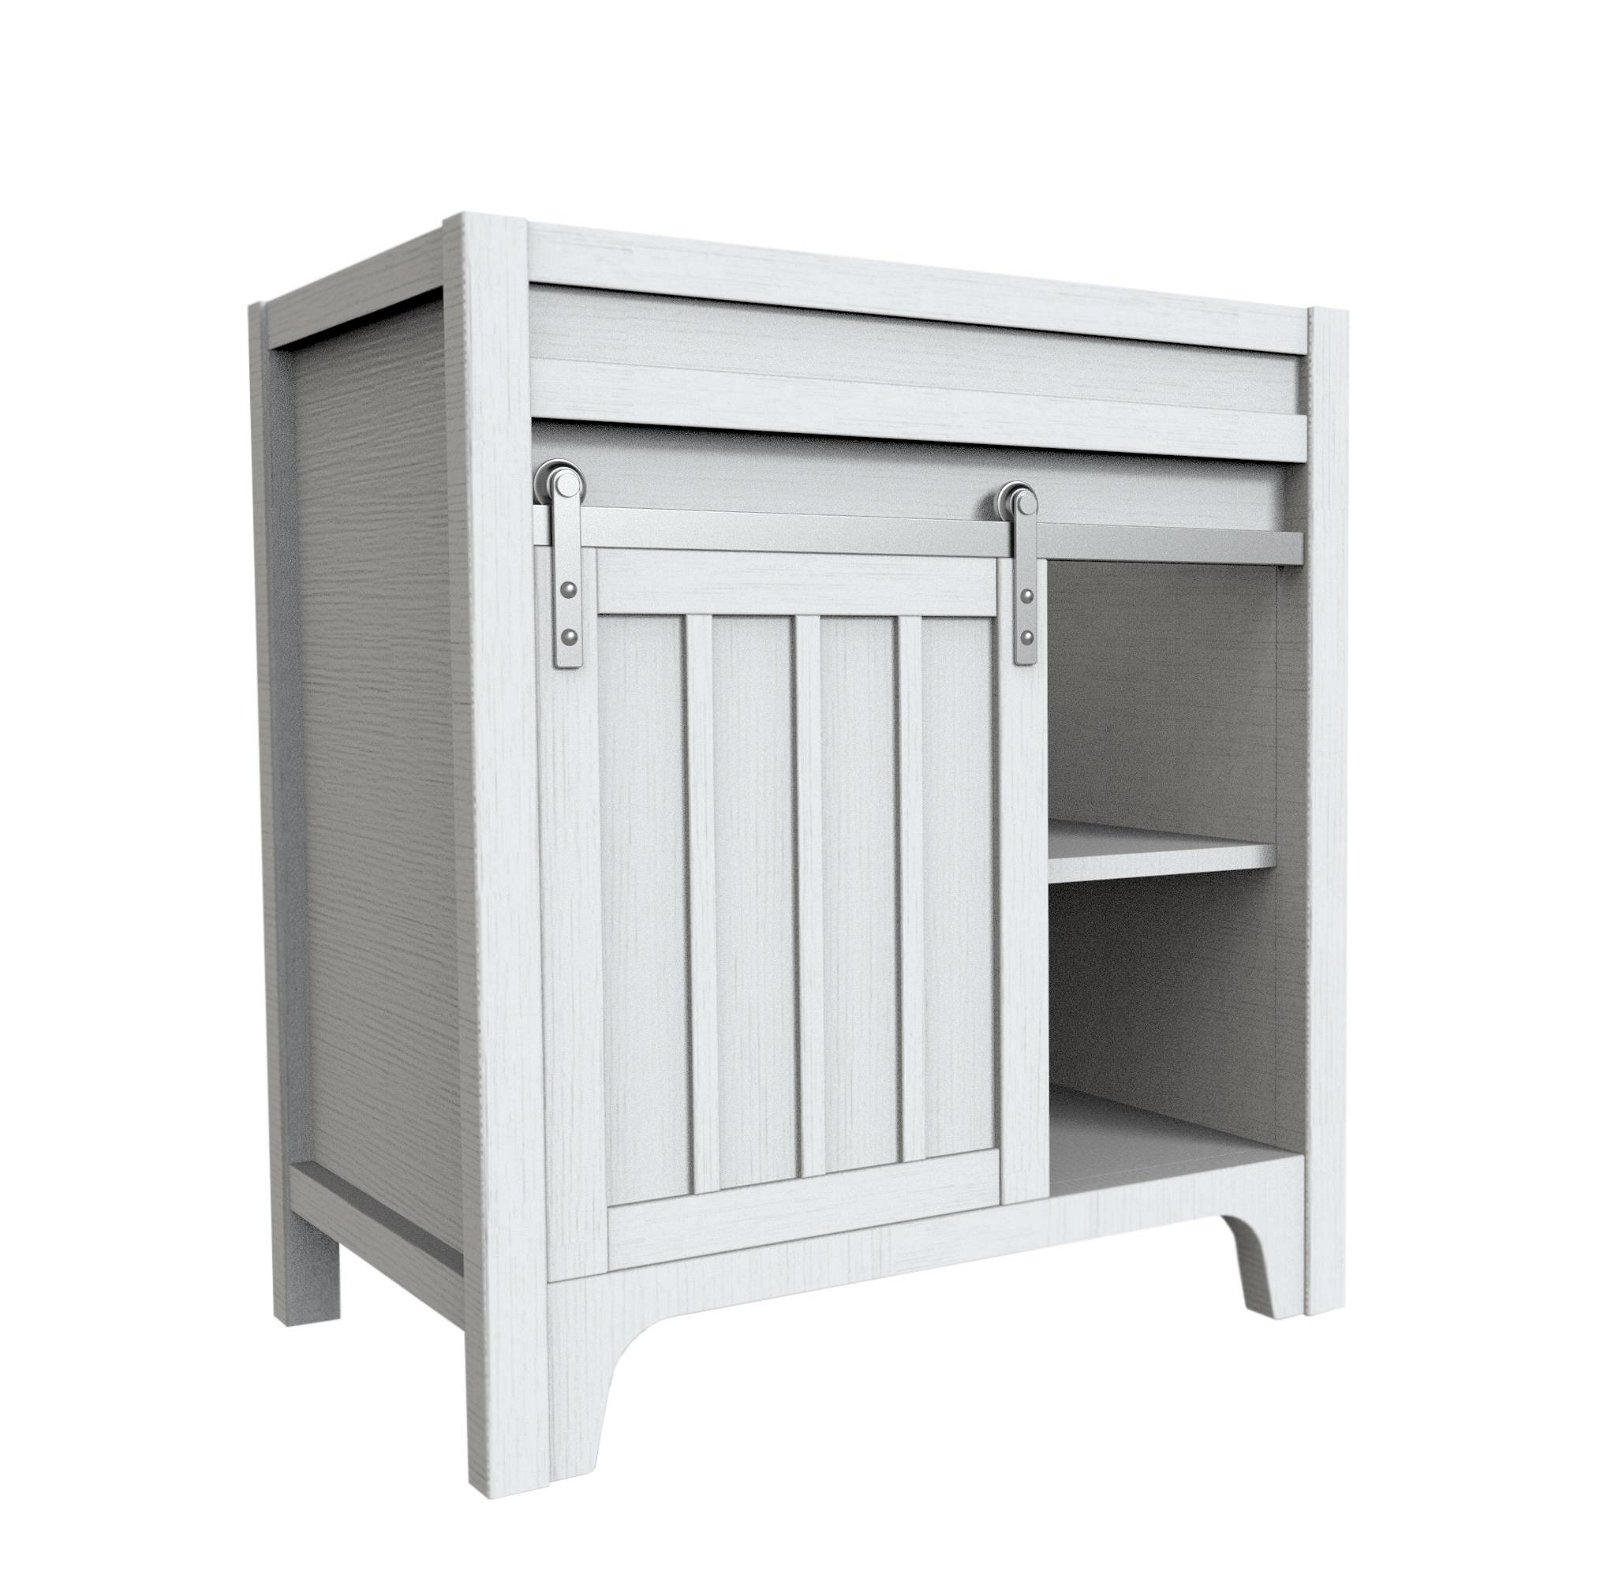 Sliding door design saves space bathroom solid wood +MDF vanity cabinet 3